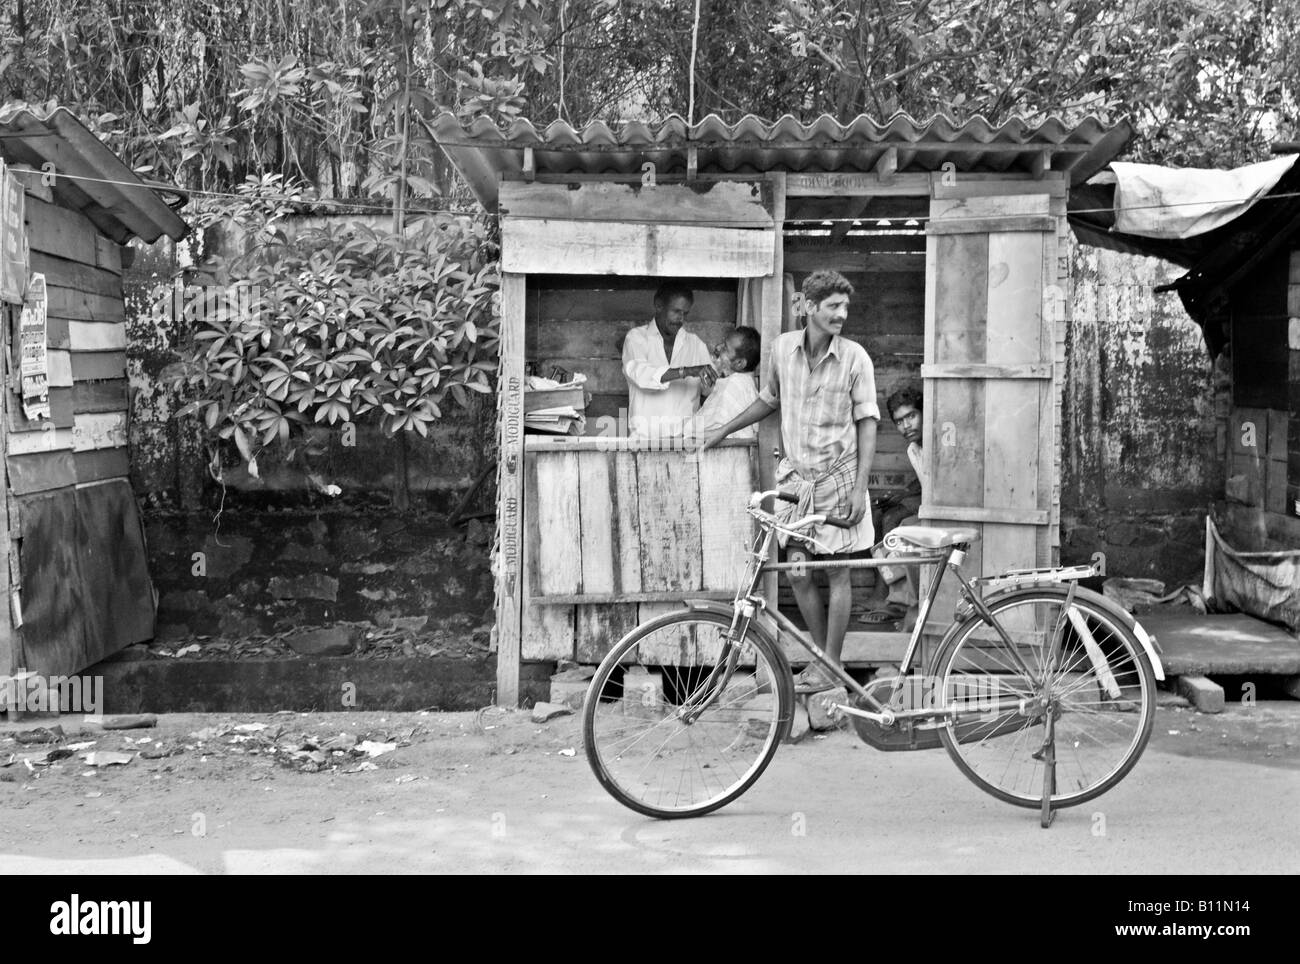 INDIA KERALA KOCHI Tiny barber shop in a shack on a dirt street in the city of Kochi Stock Photo